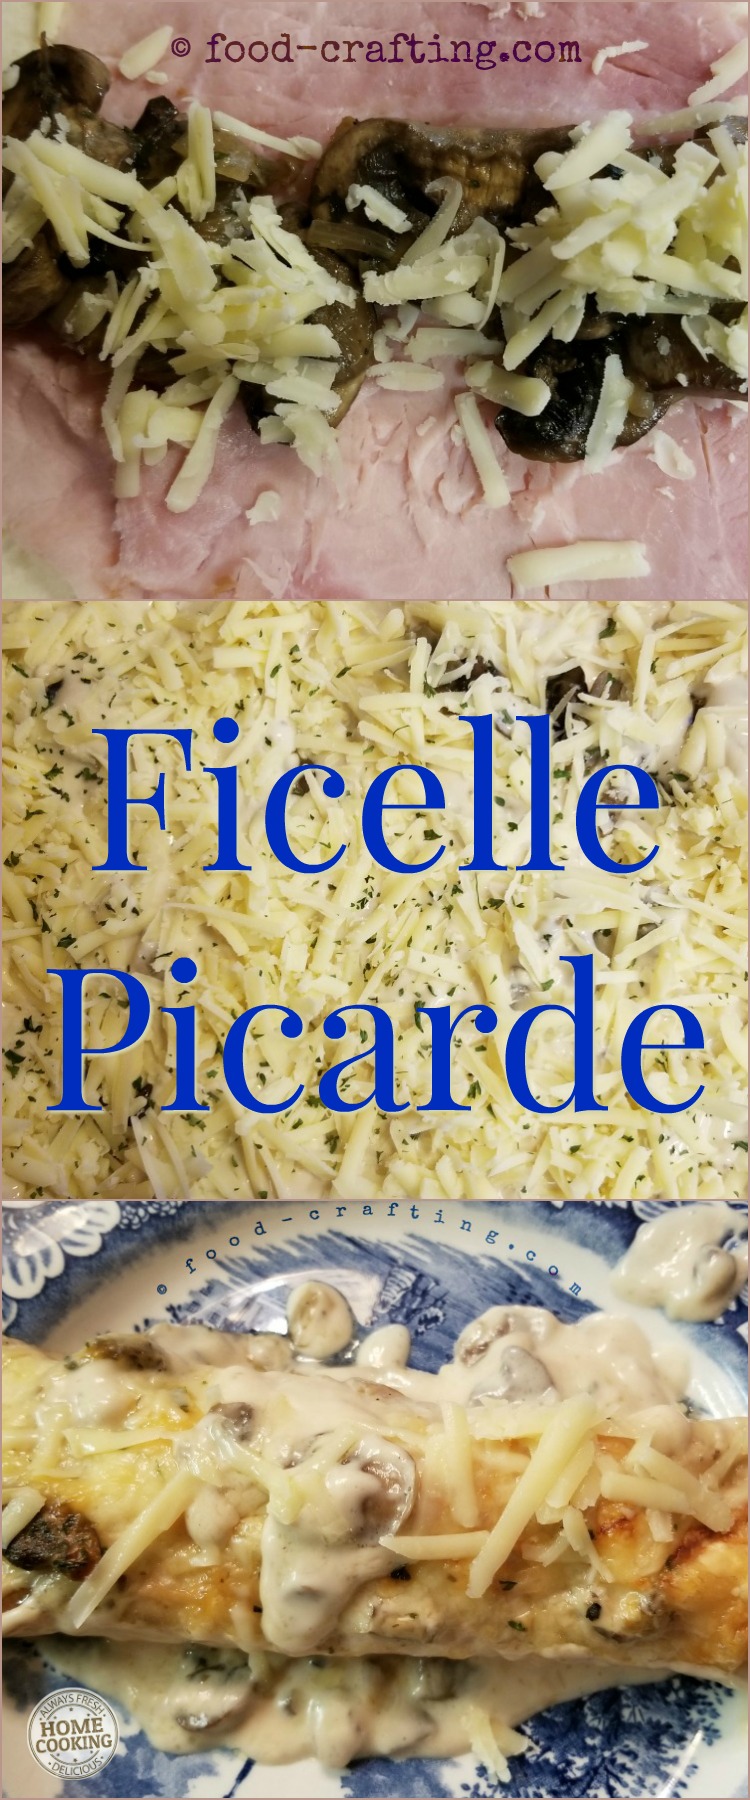 easy-ficelle-picarde-recipe2